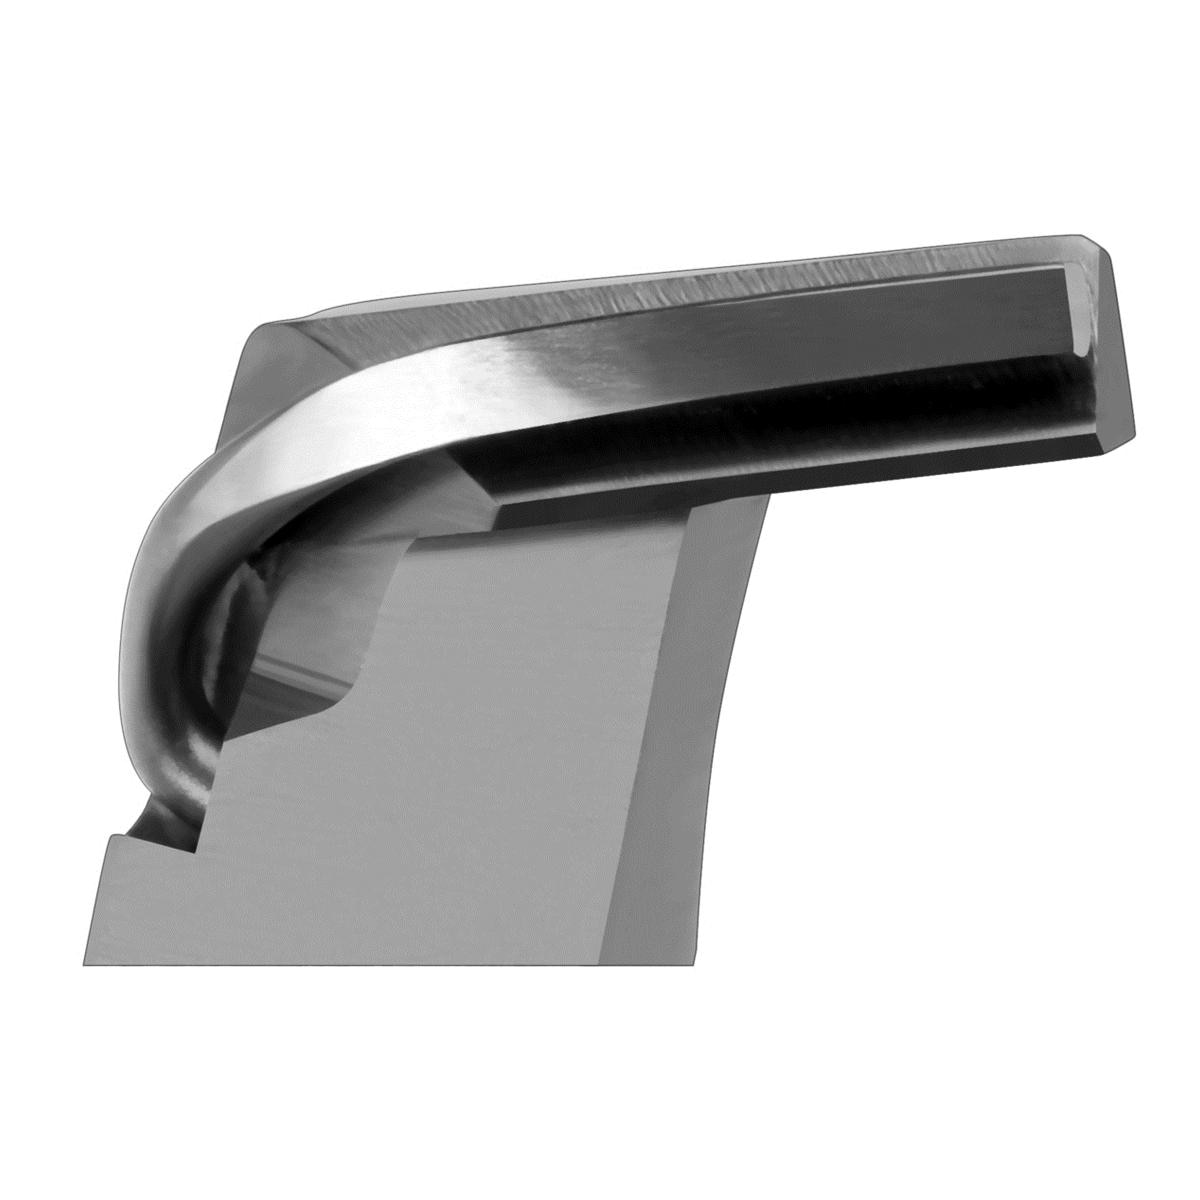 Distal End Cutter Flush Cutter & Hold TC - Standard Handle 13 cm - OLS-1113